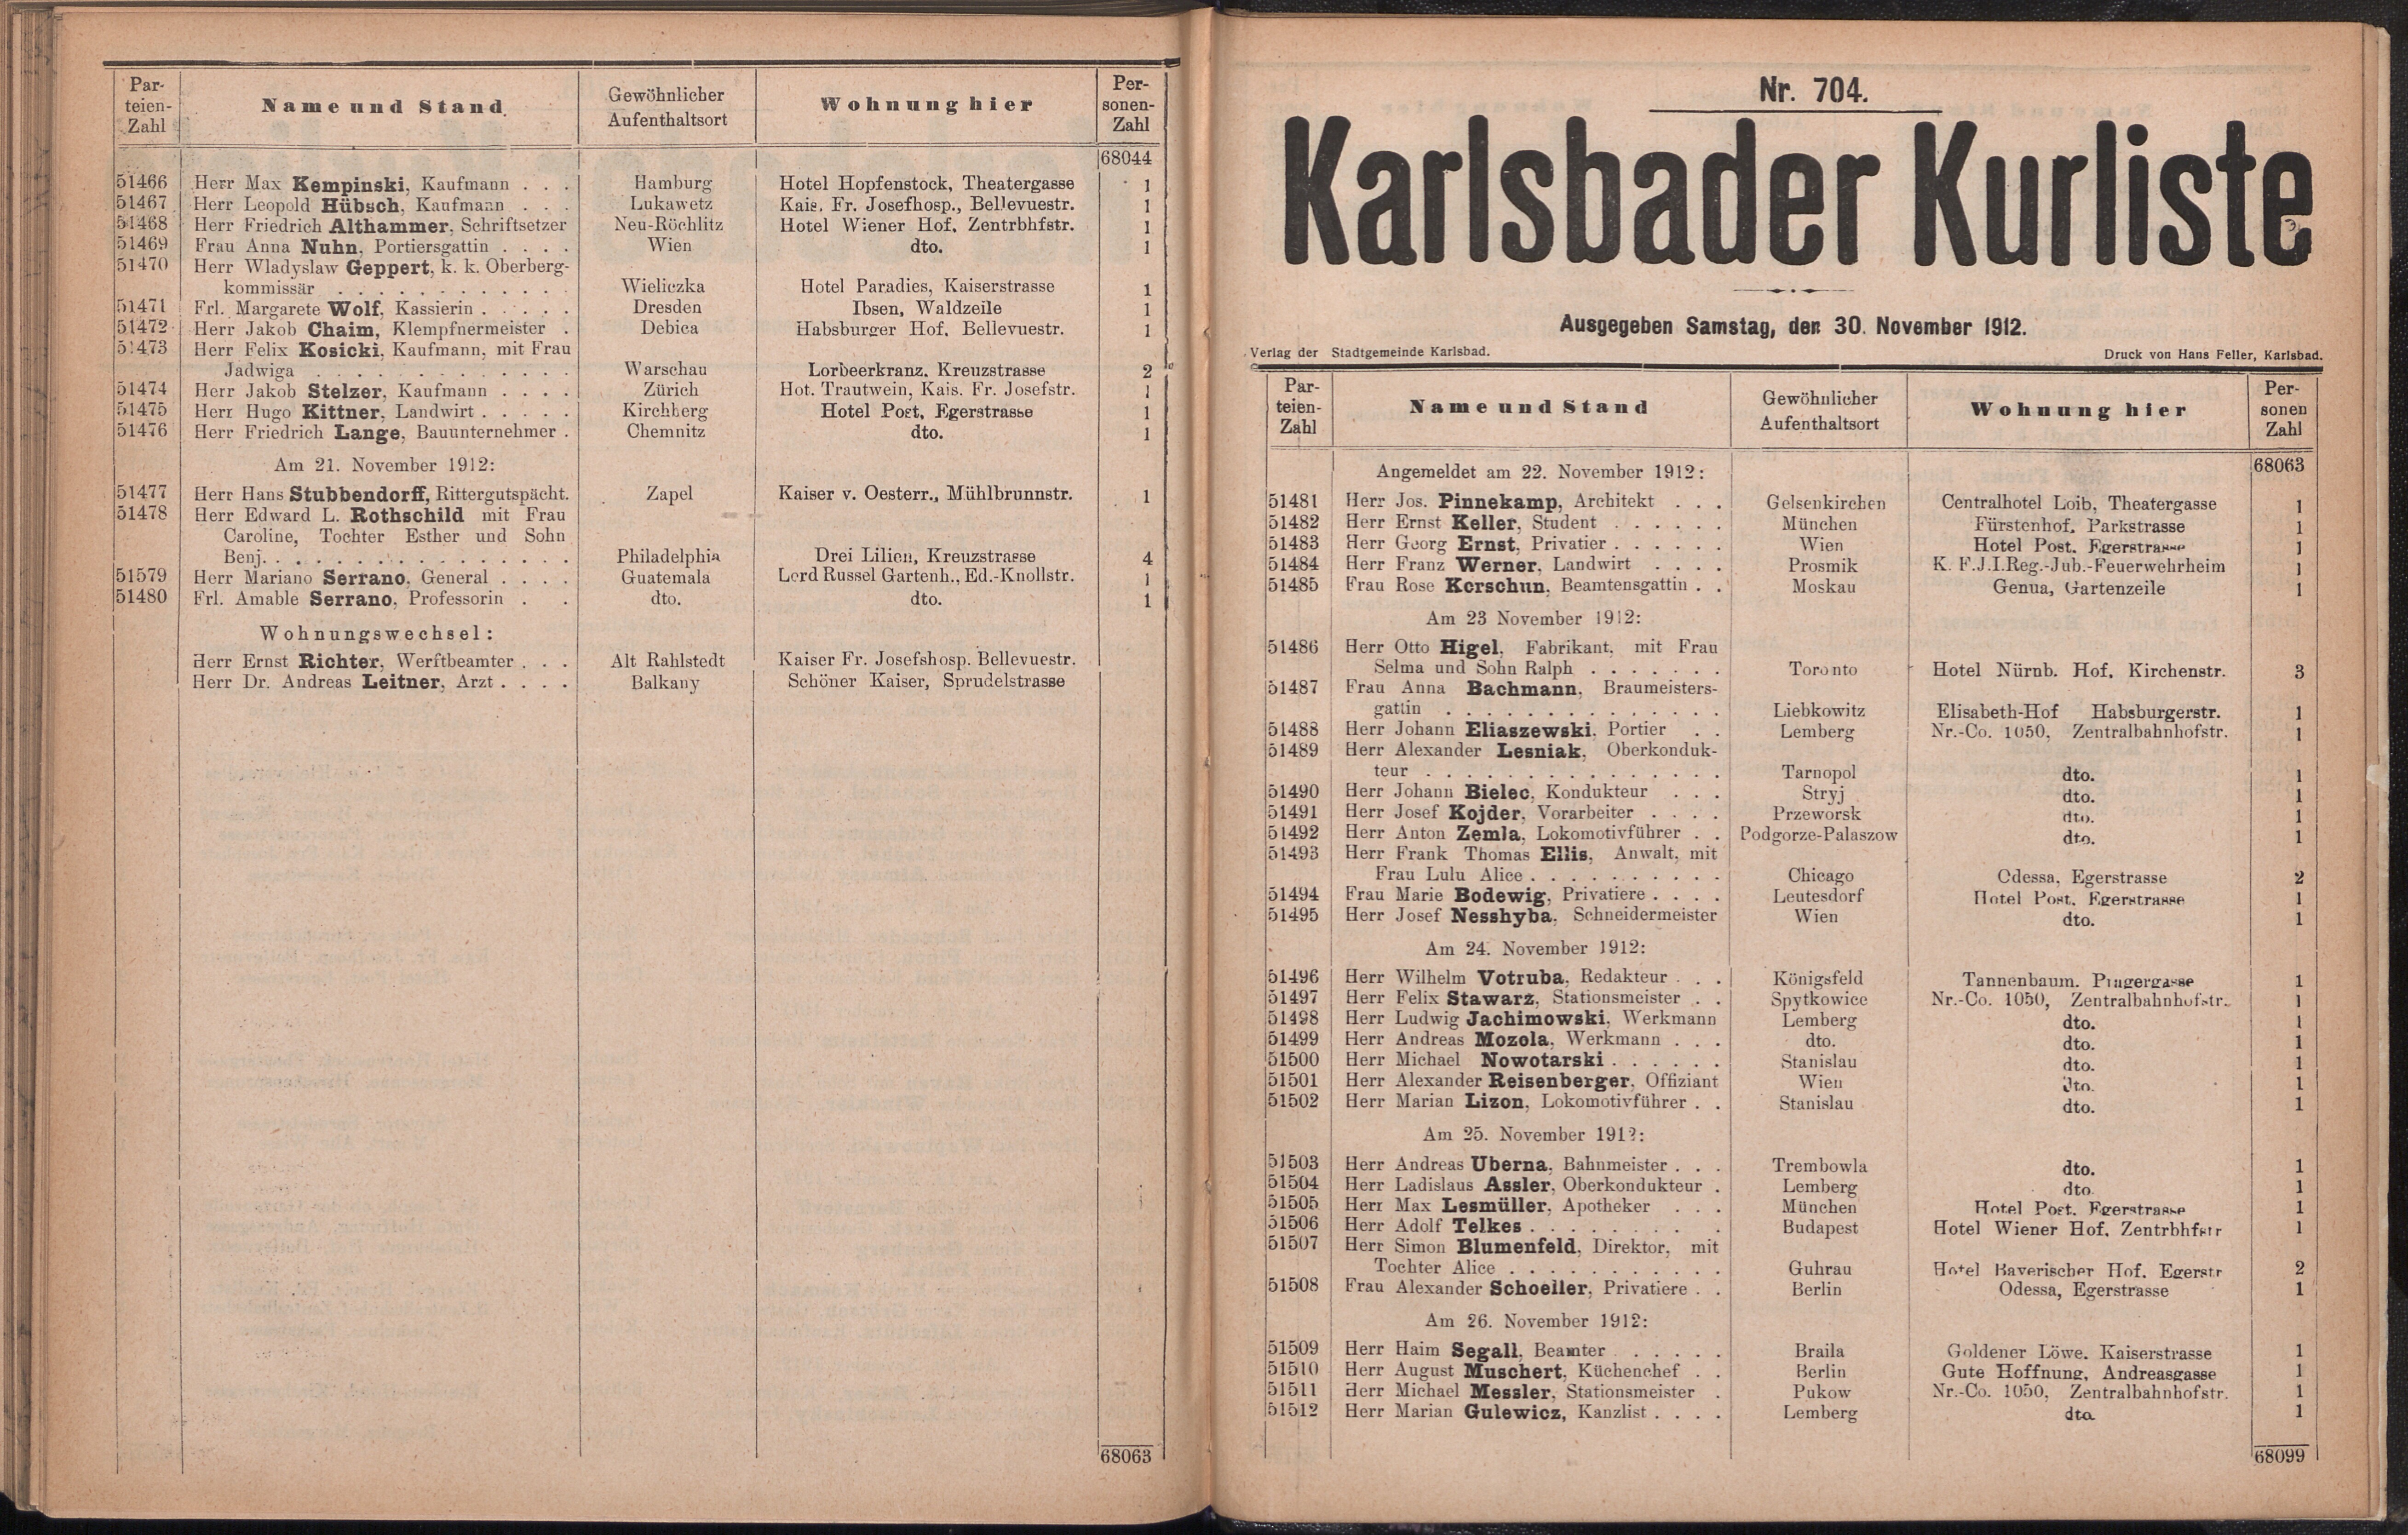 423. soap-kv_knihovna_karlsbader-kurliste-1912-2_4230